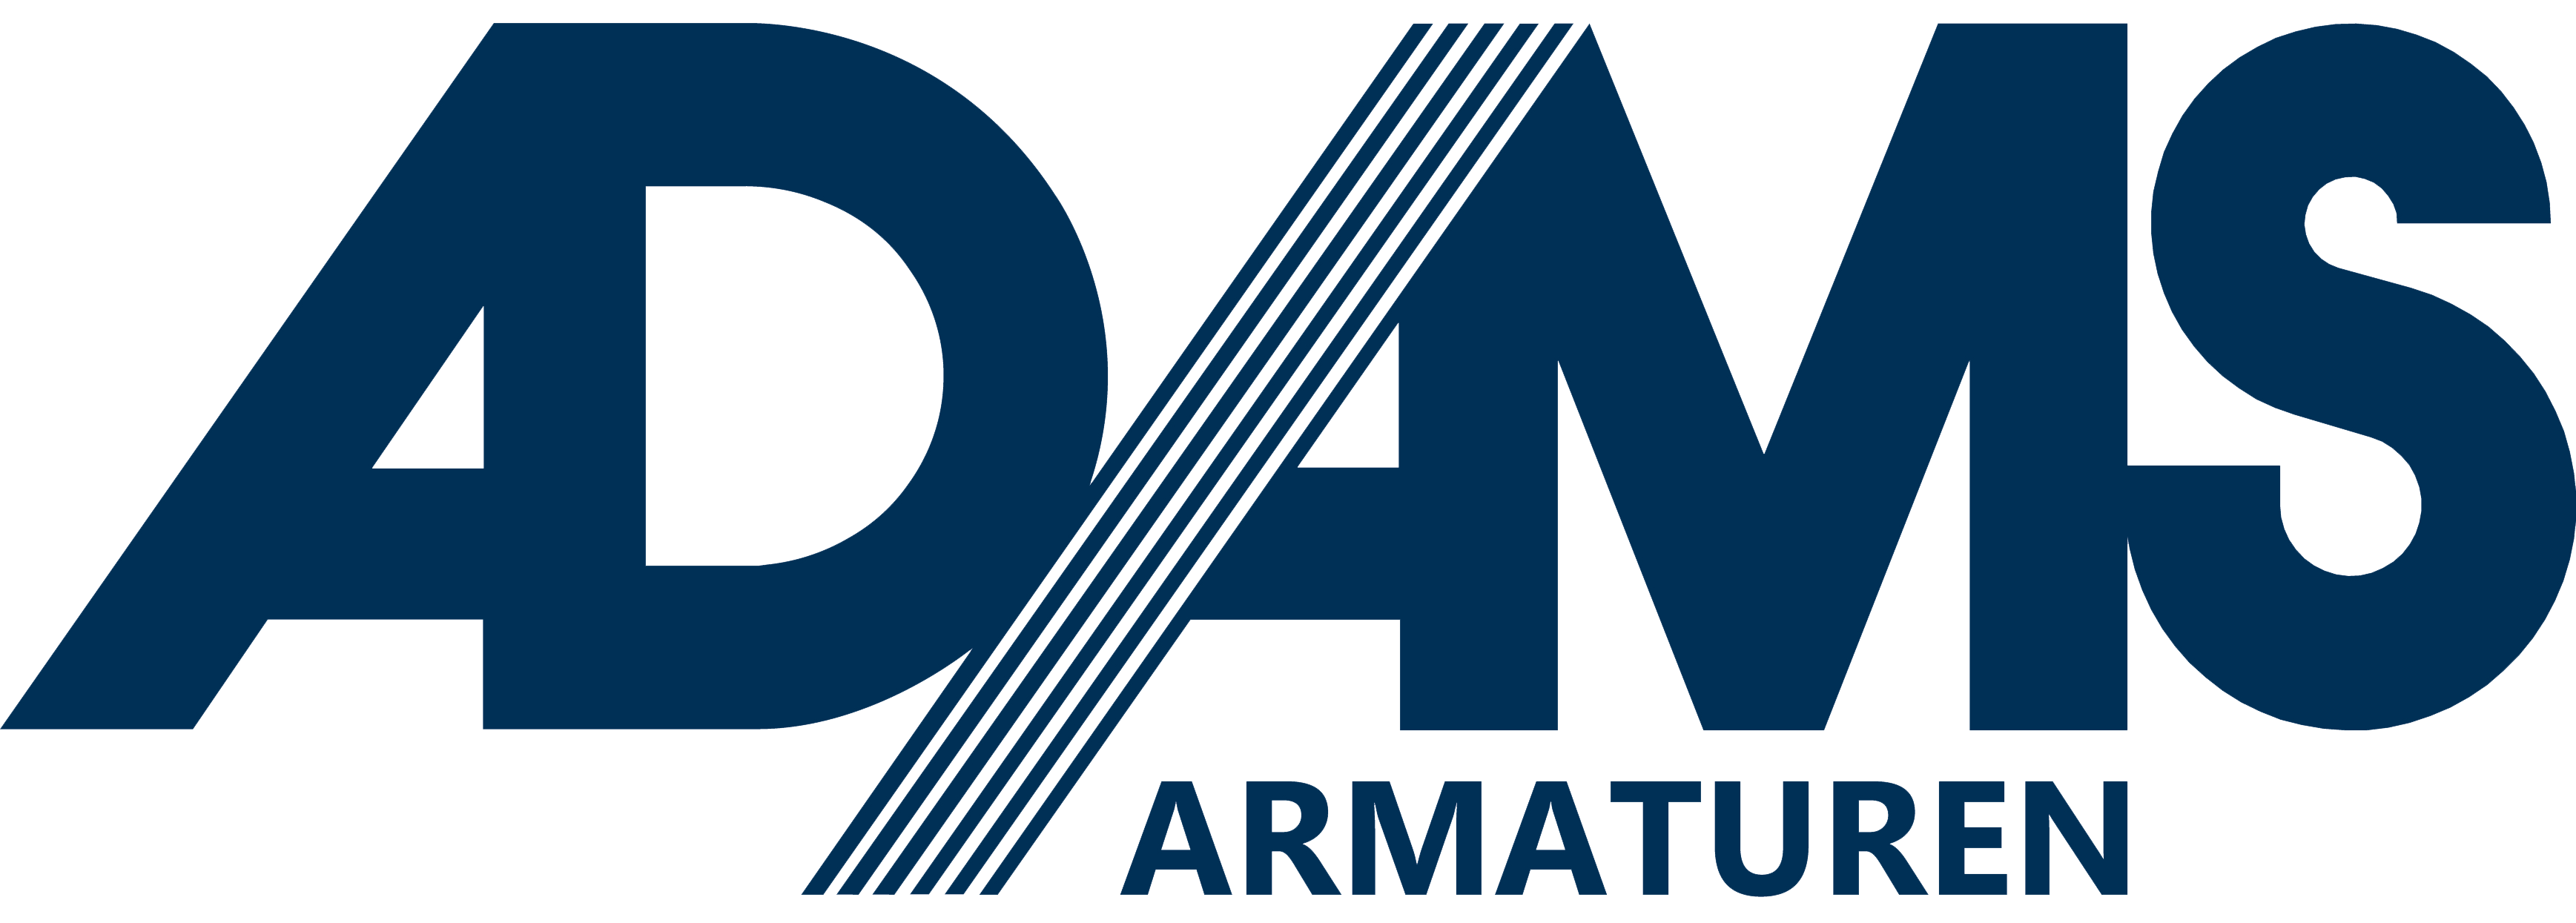 Adams-Armaturen-logo-Blau